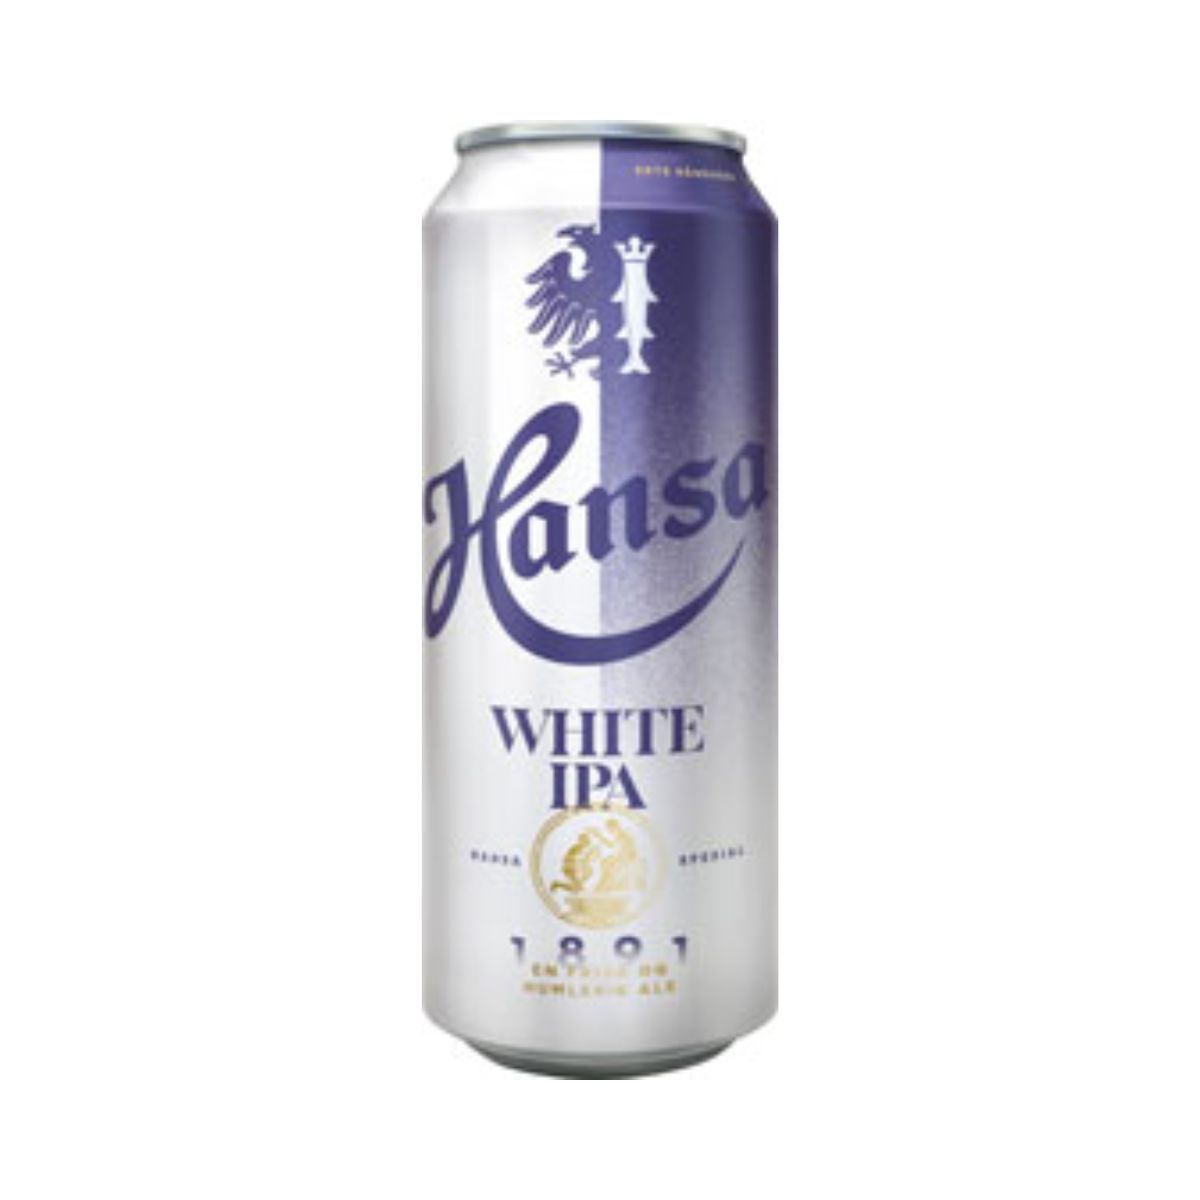 Hansa Spesial White IPA 0.5l bx